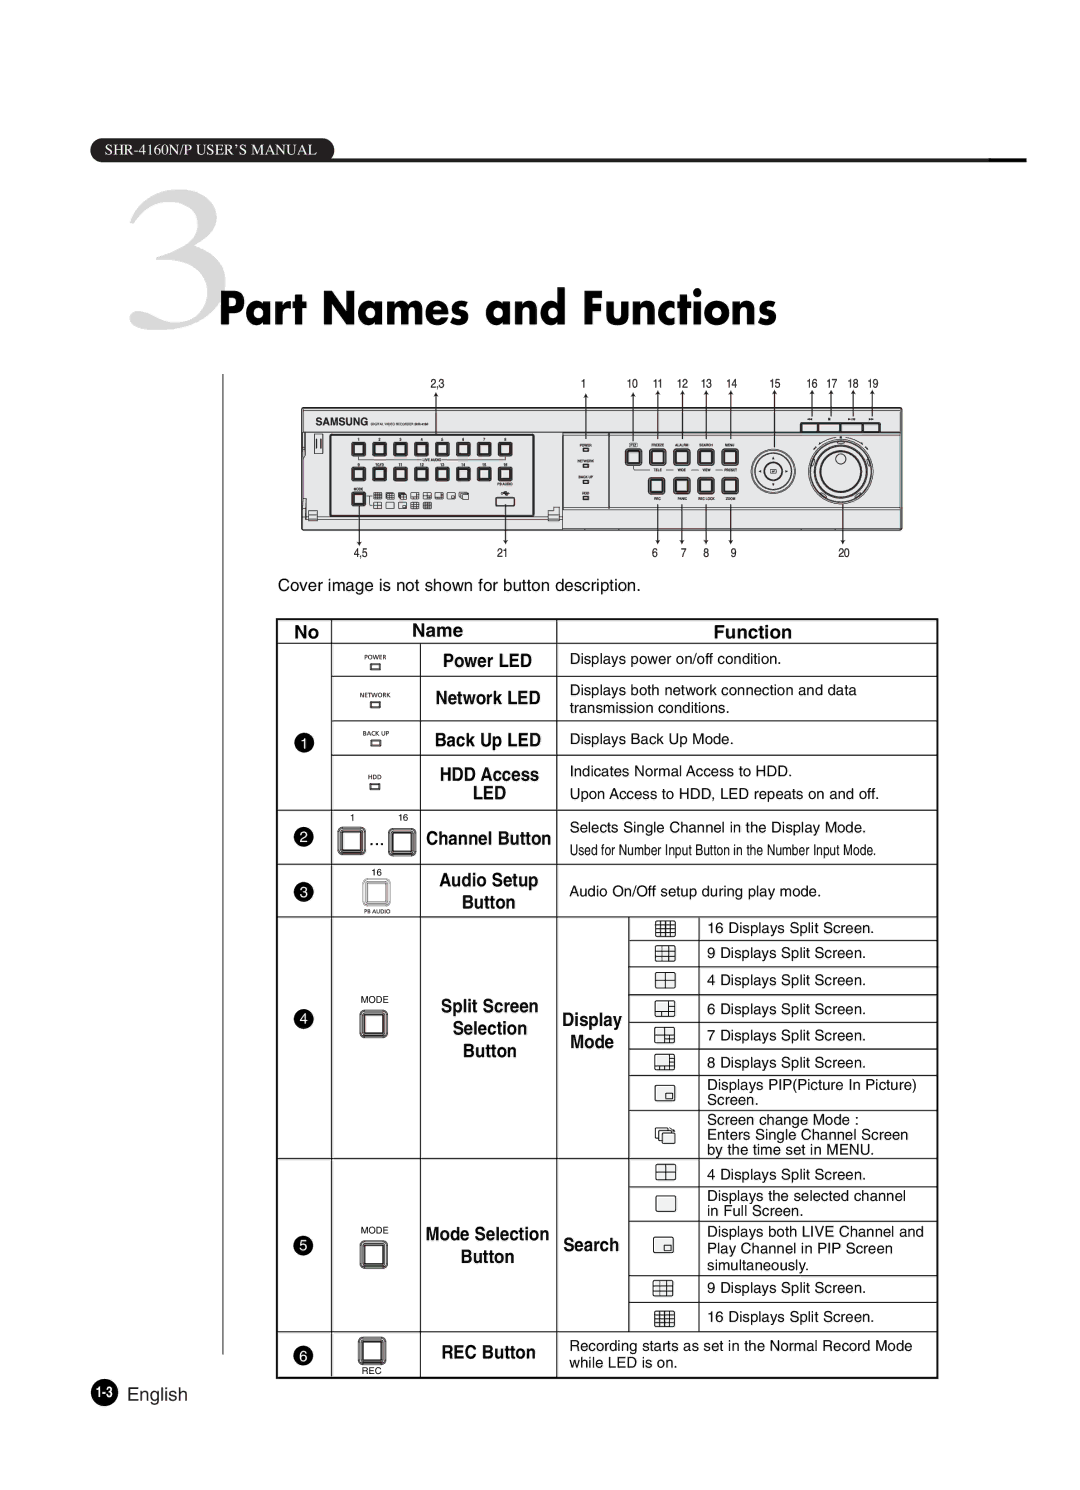 Samsung SHR-4160P manual 3Part Names and Functions, 3English 